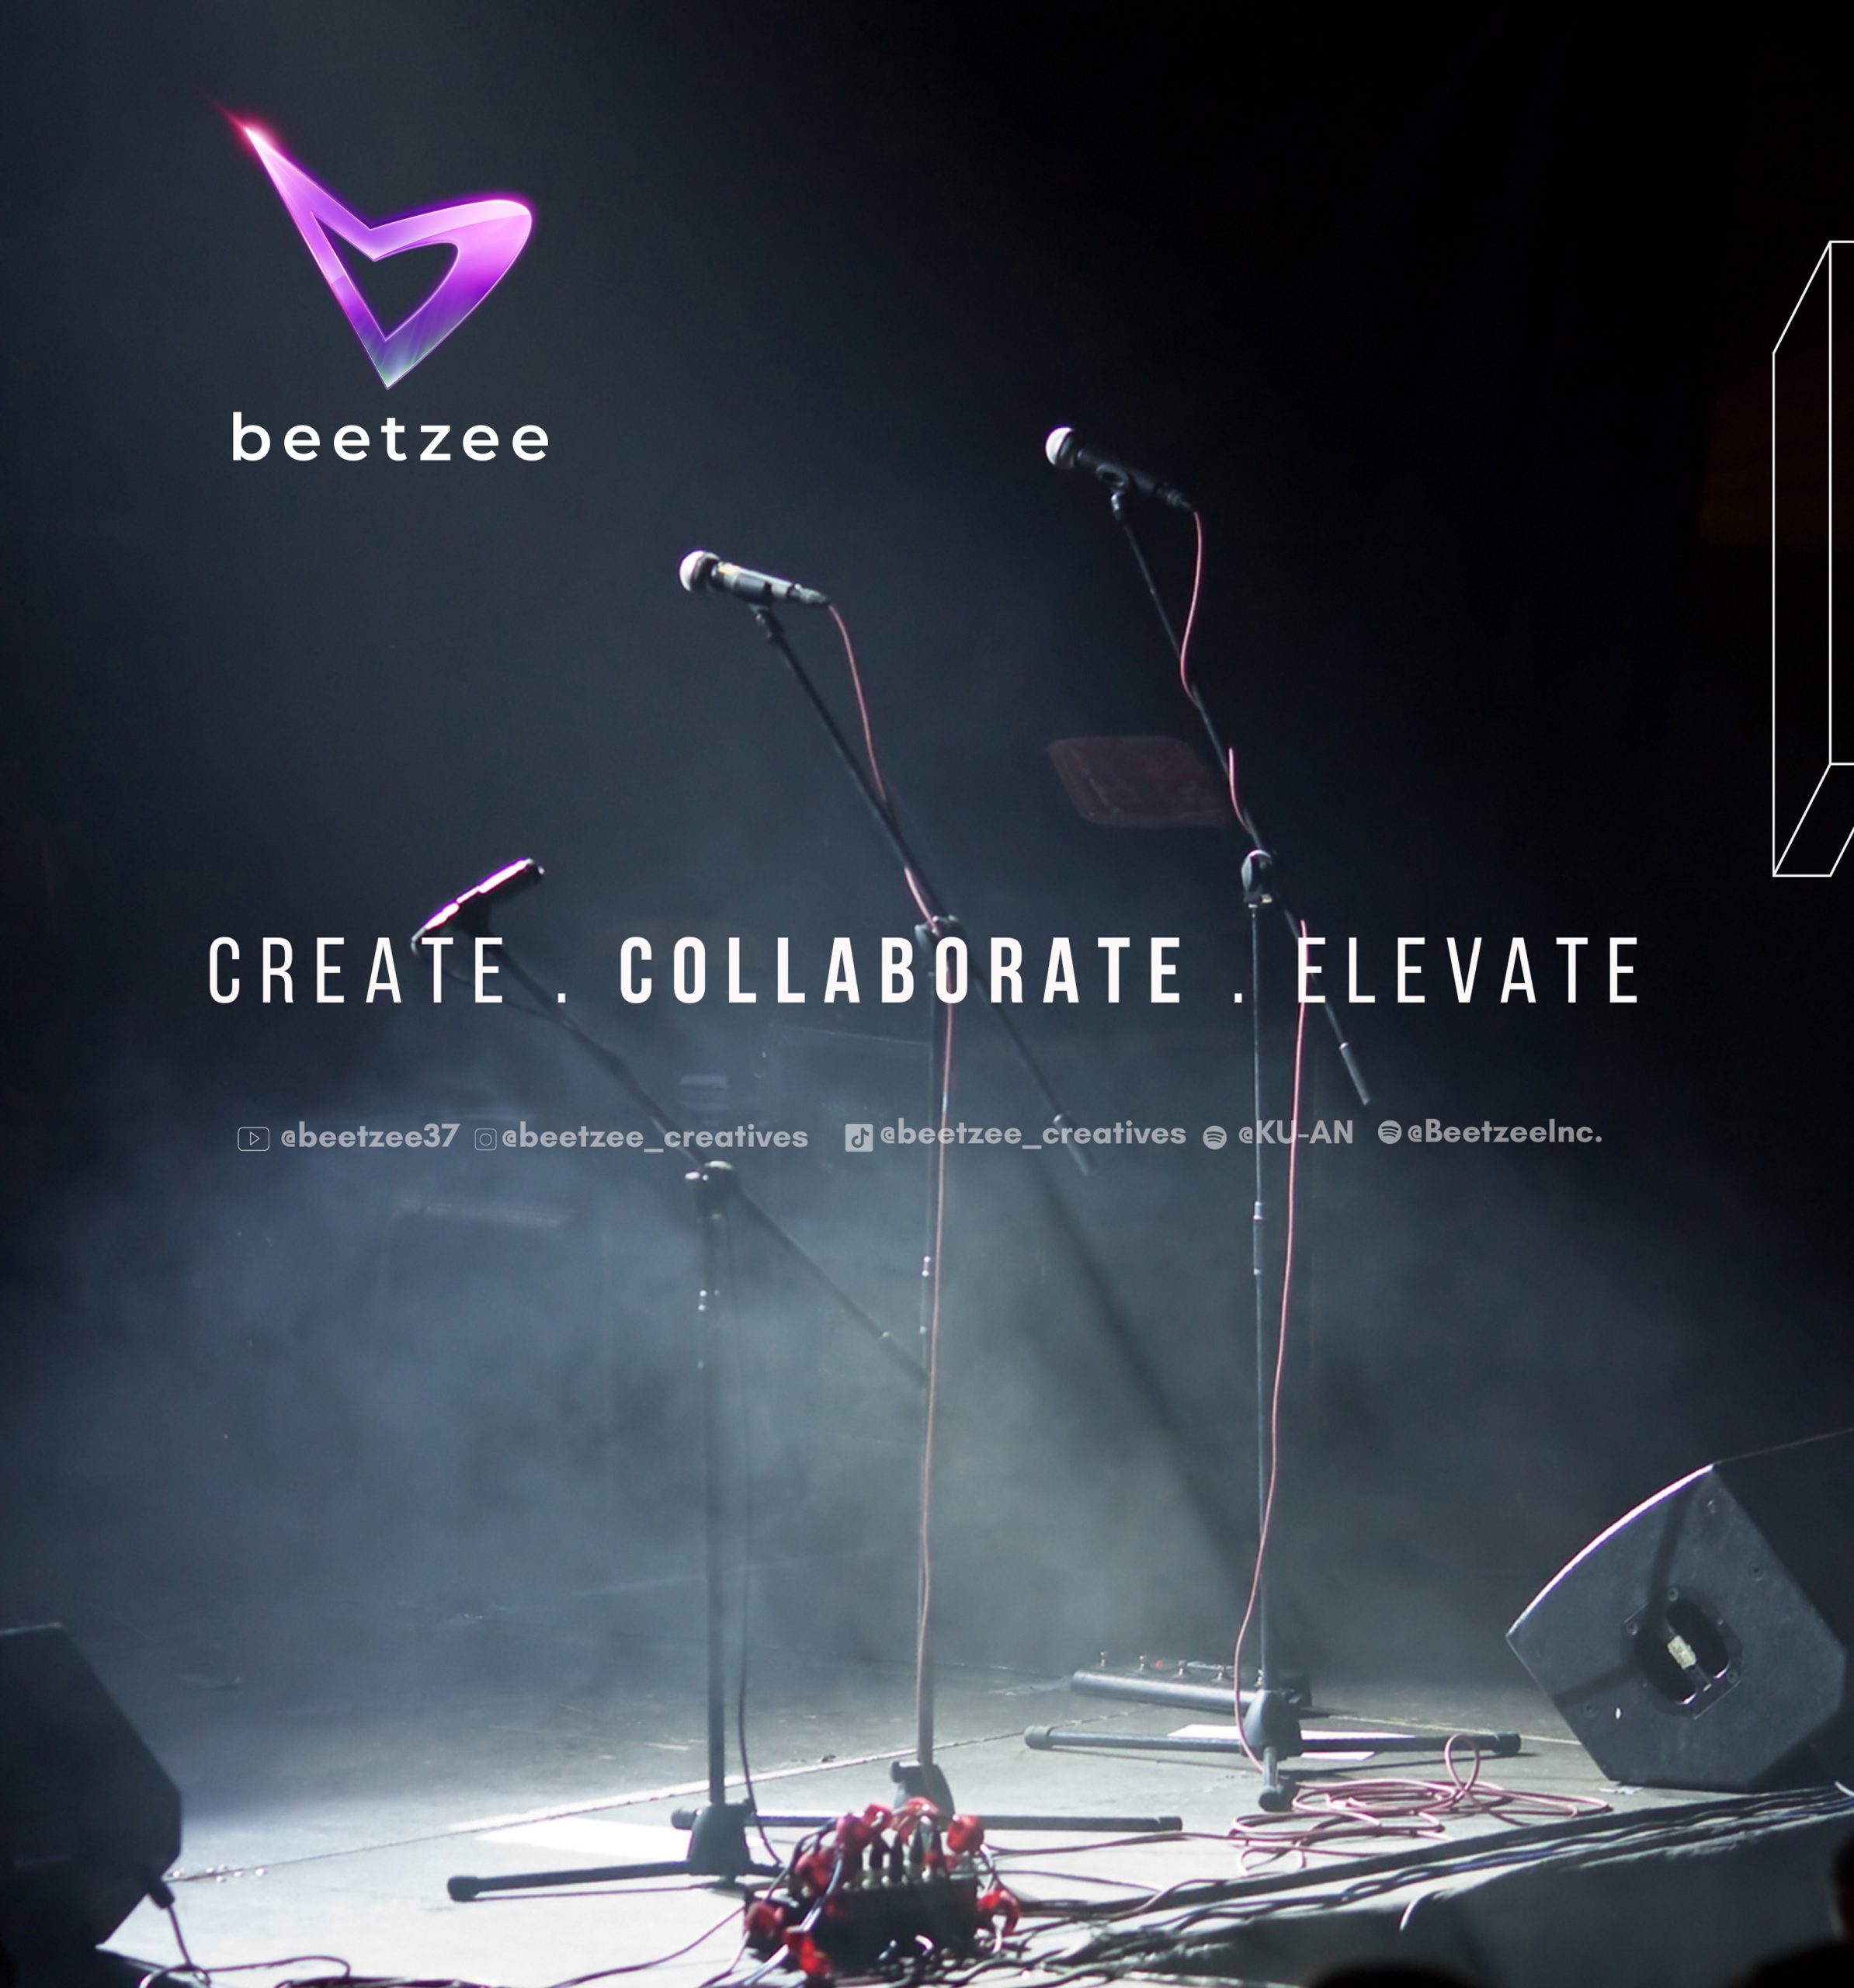 beetzee – Create. Collaborate. Elevate